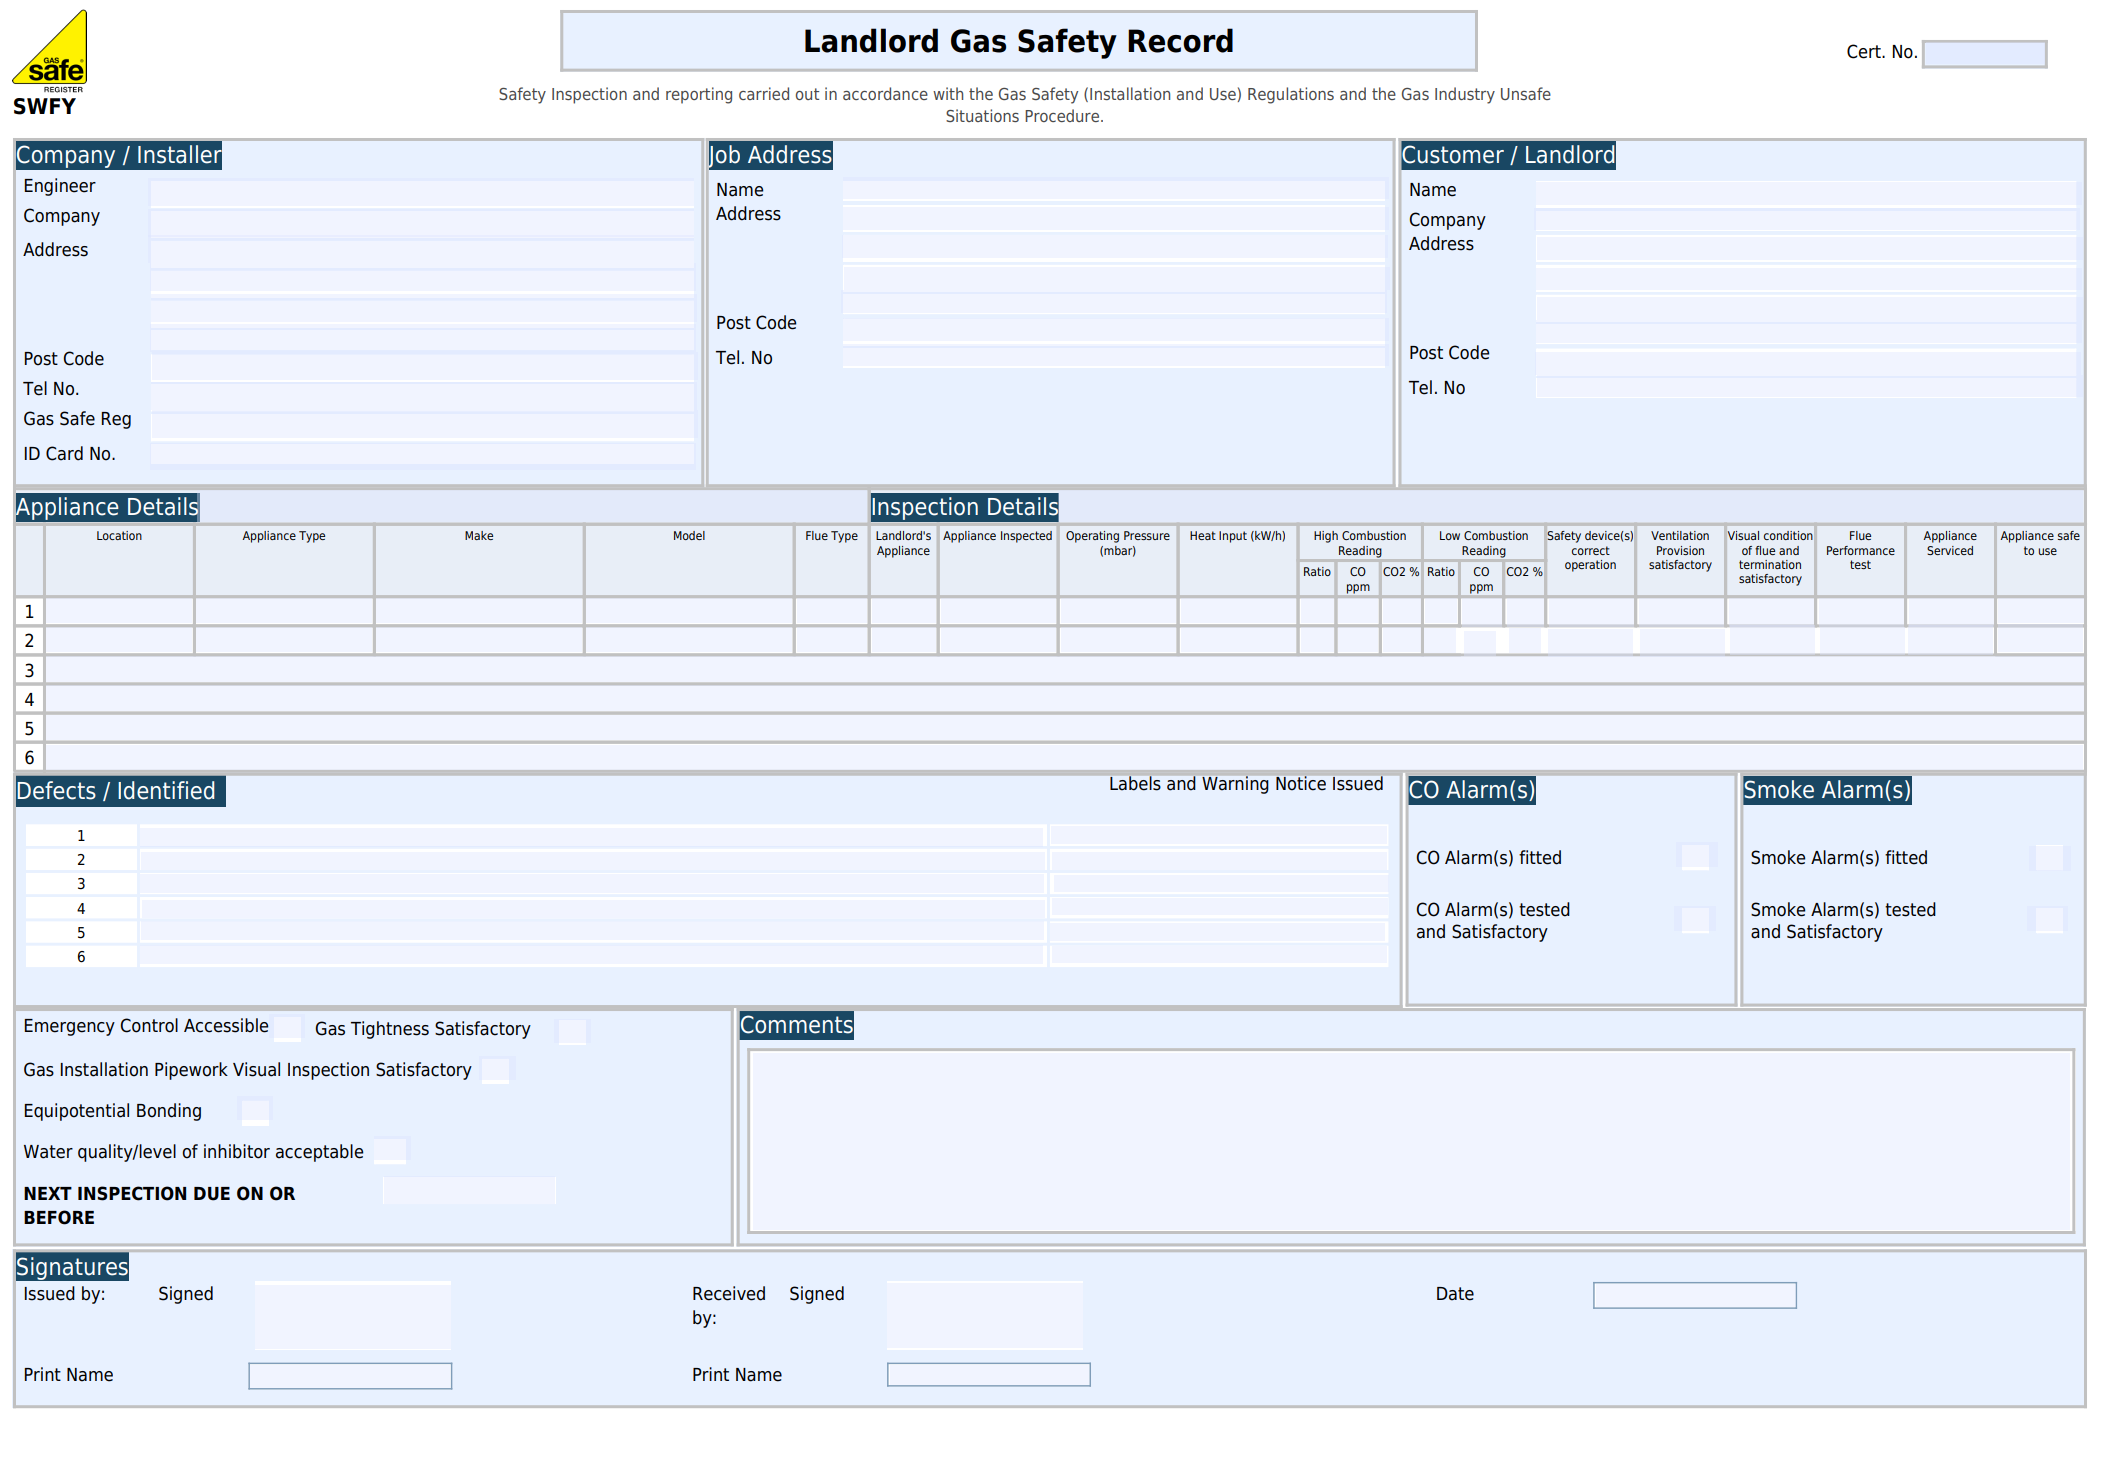 Sample image of the legionella risk assessment template